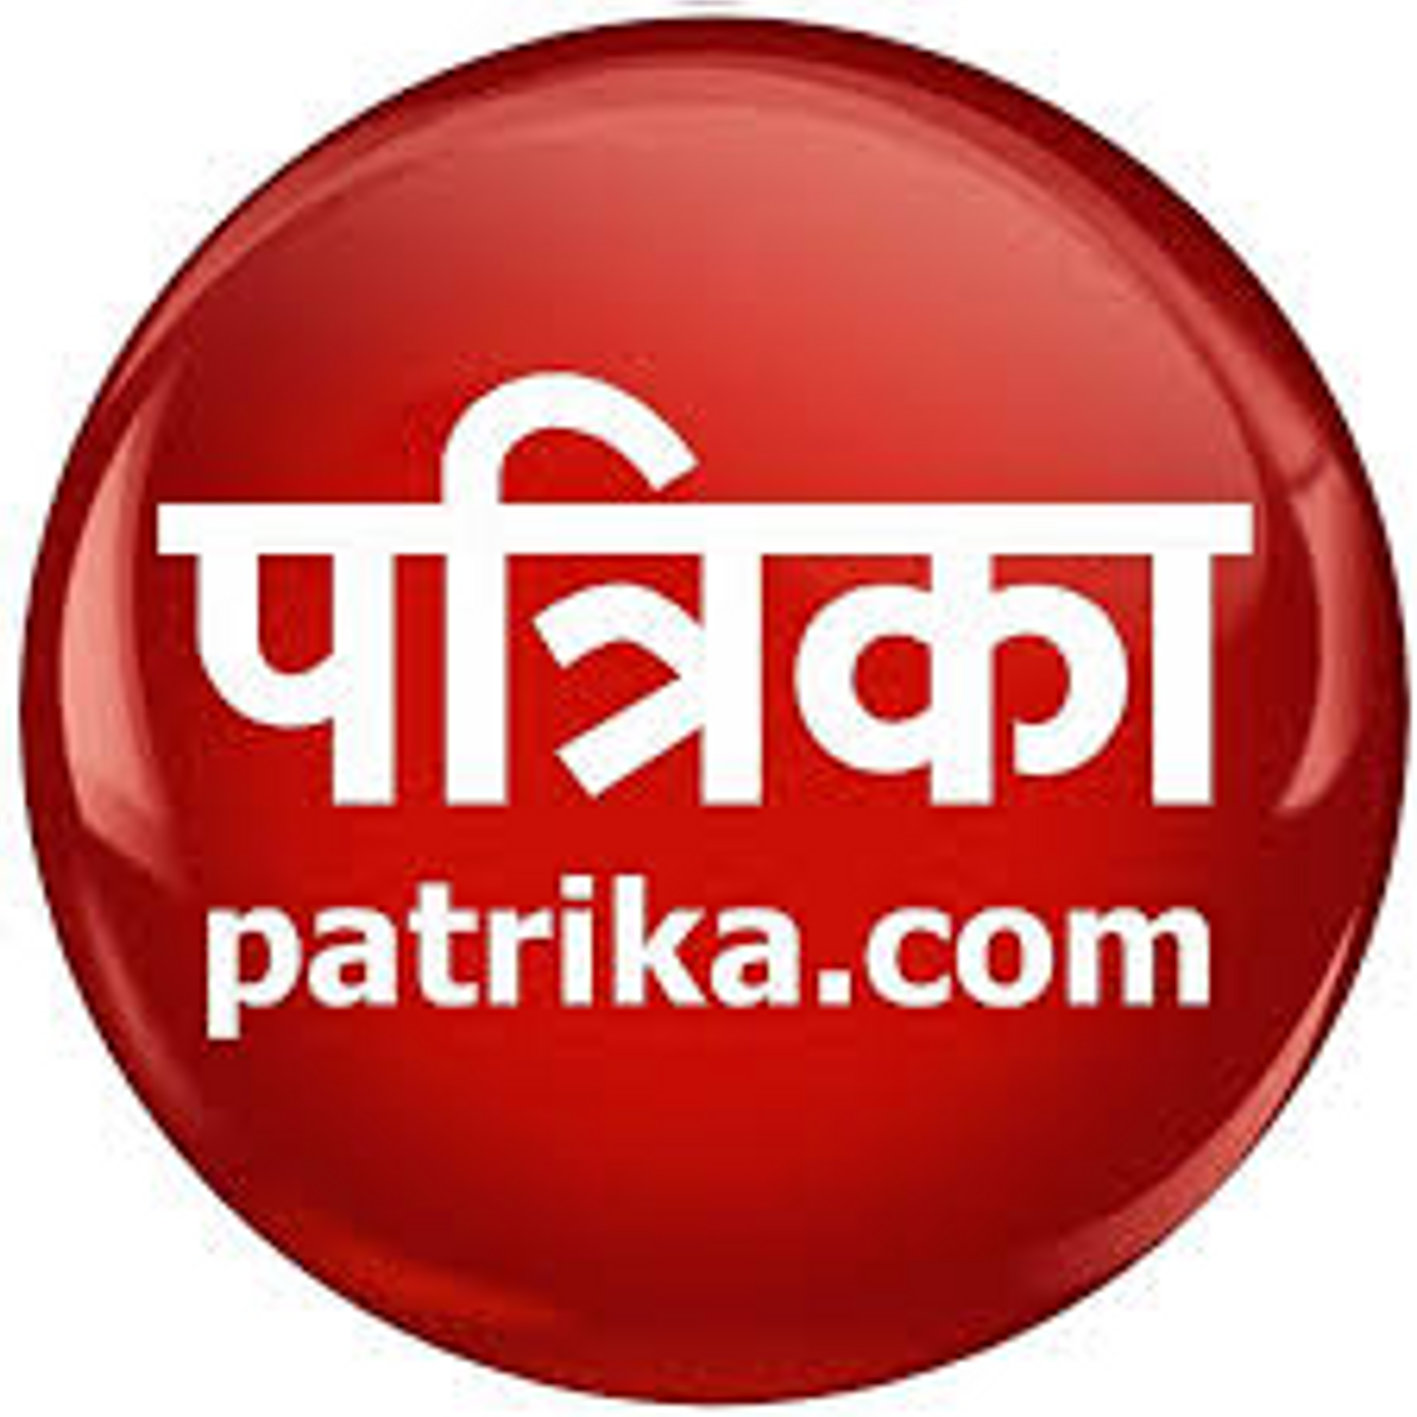 Patrika Group logo :: Behance